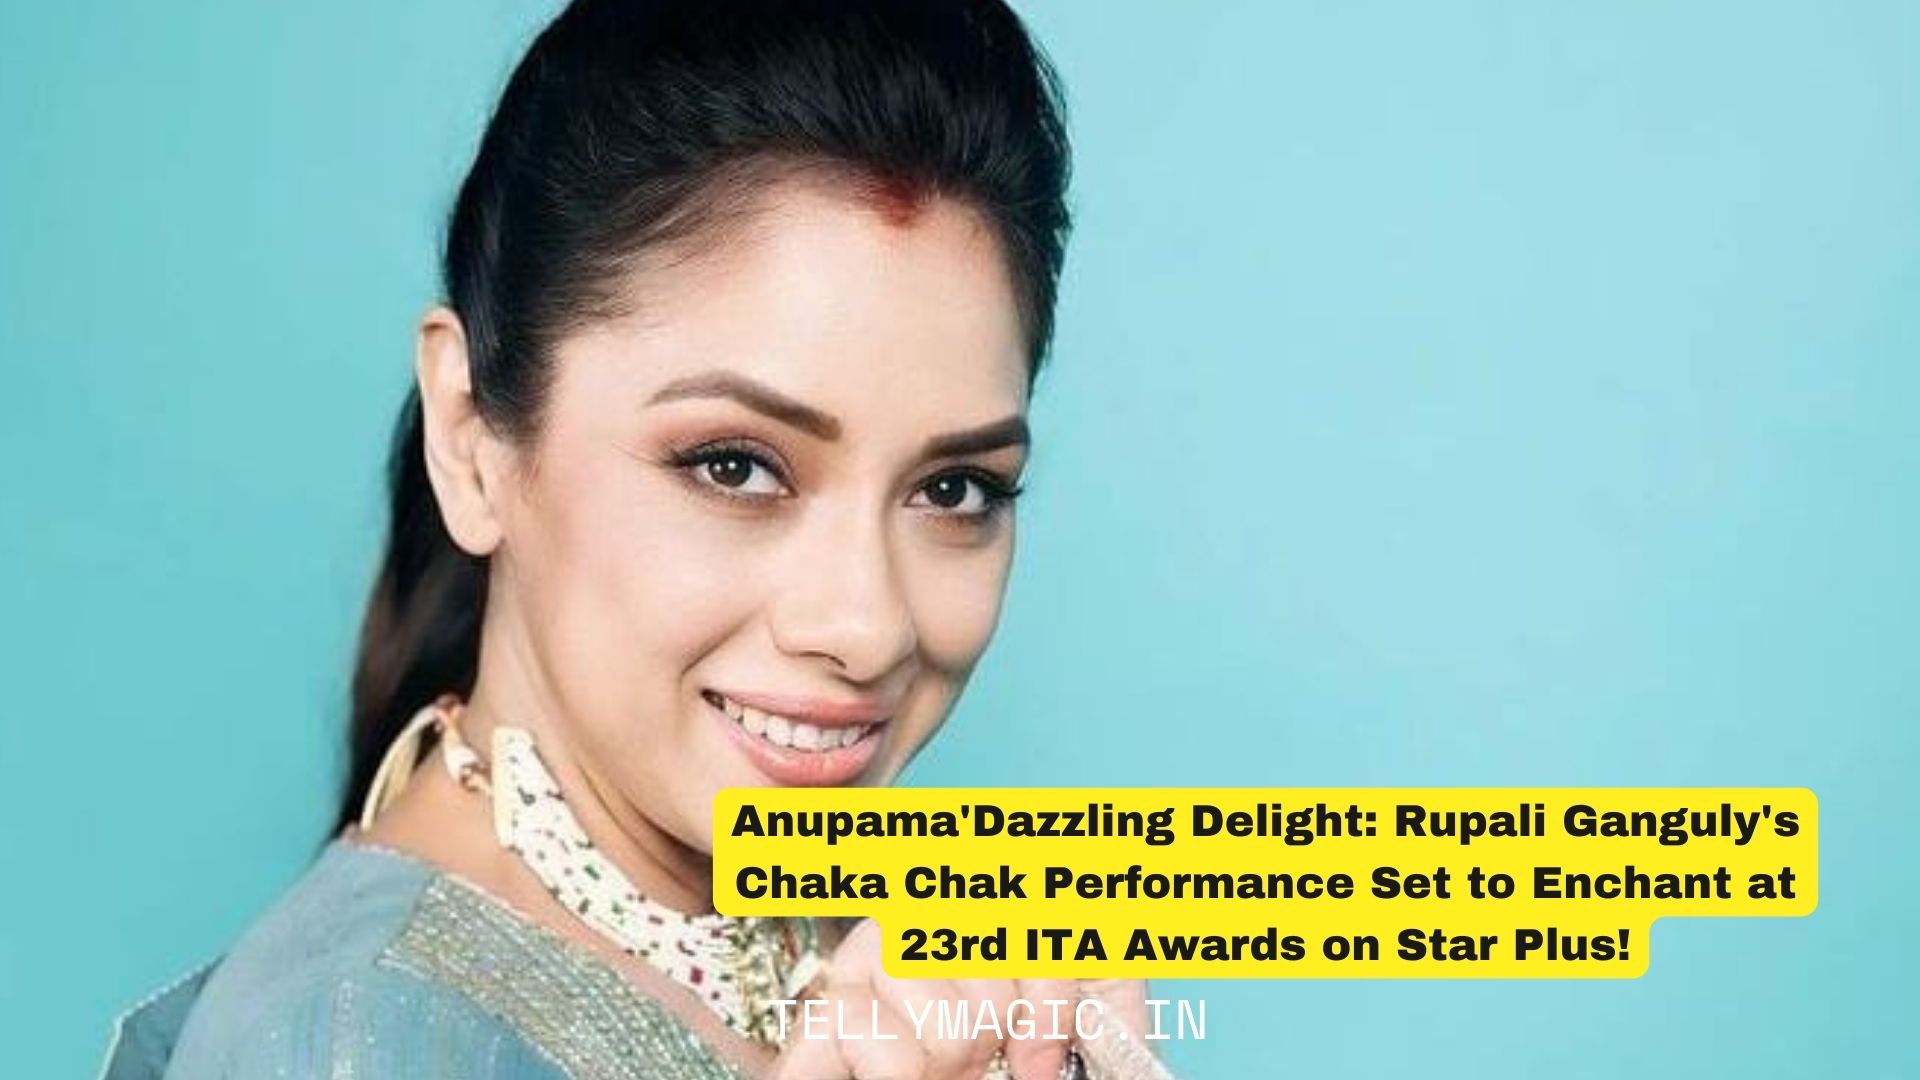 Anupama Dazzling Delight: Rupali Ganguly Chaka Chak Performance Set to Enchant at 23rd ITA Awards on Star Plus